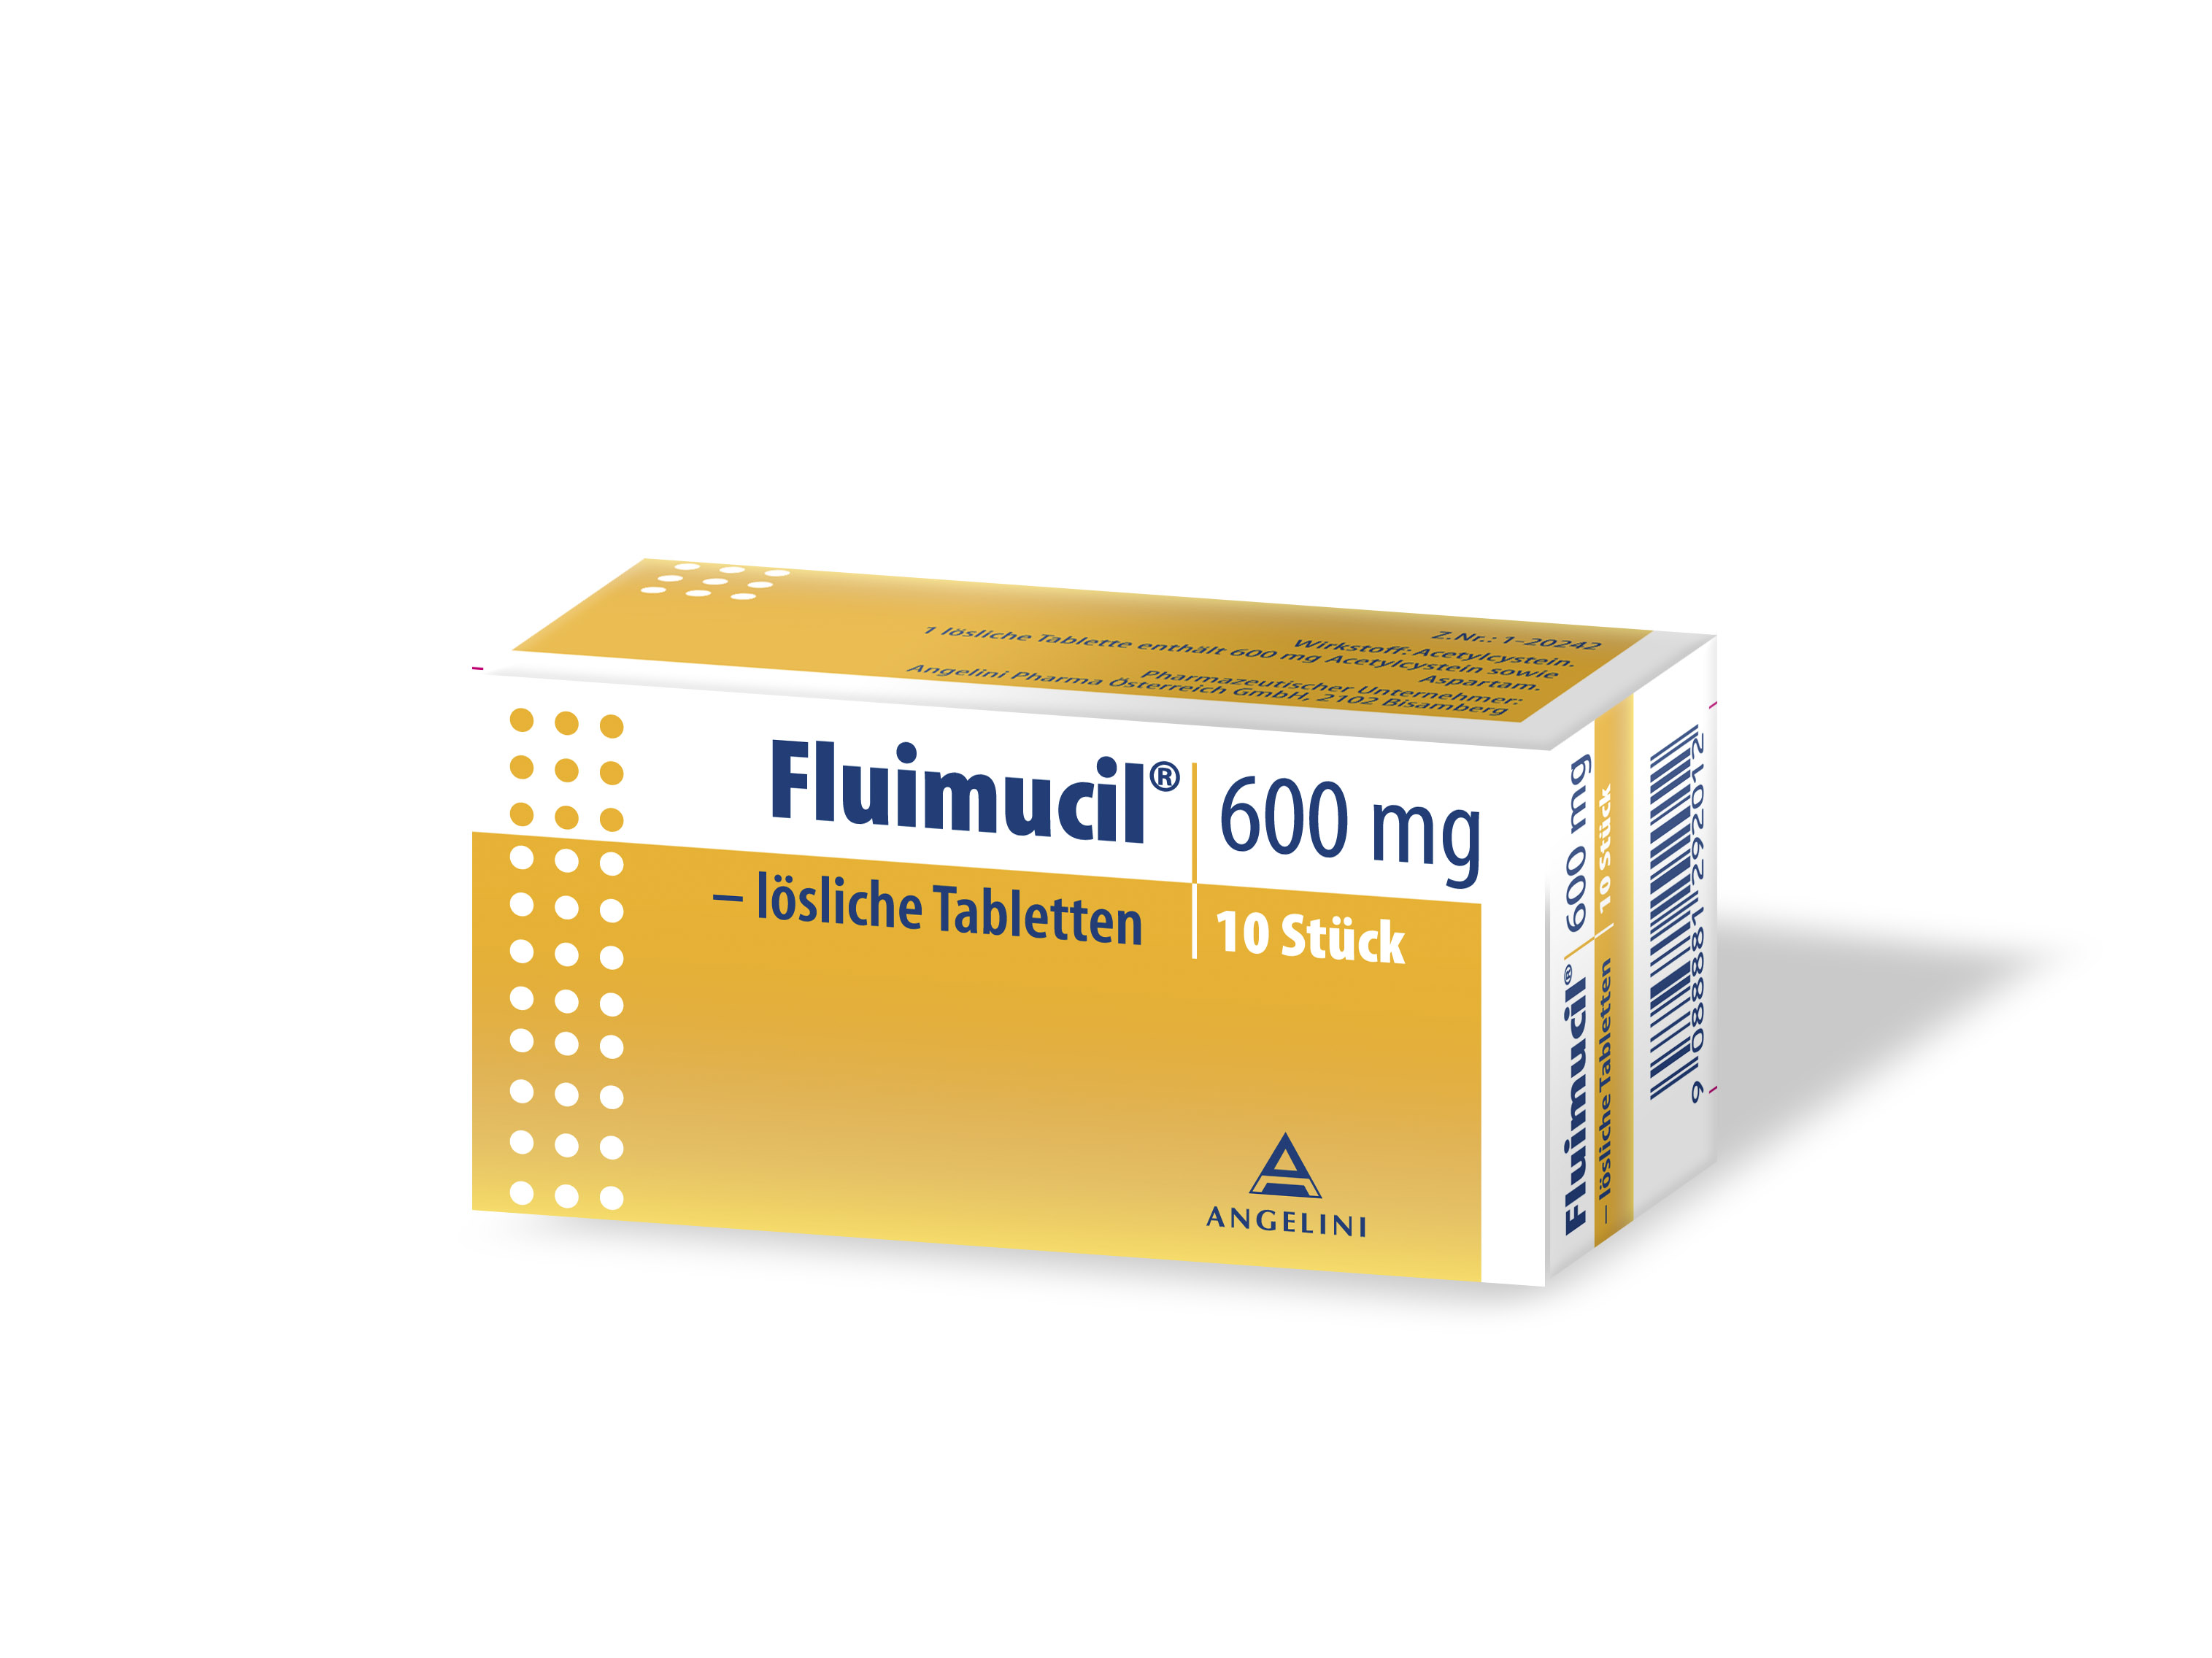 Fluimucil 600 mg - lösliche Tabletten